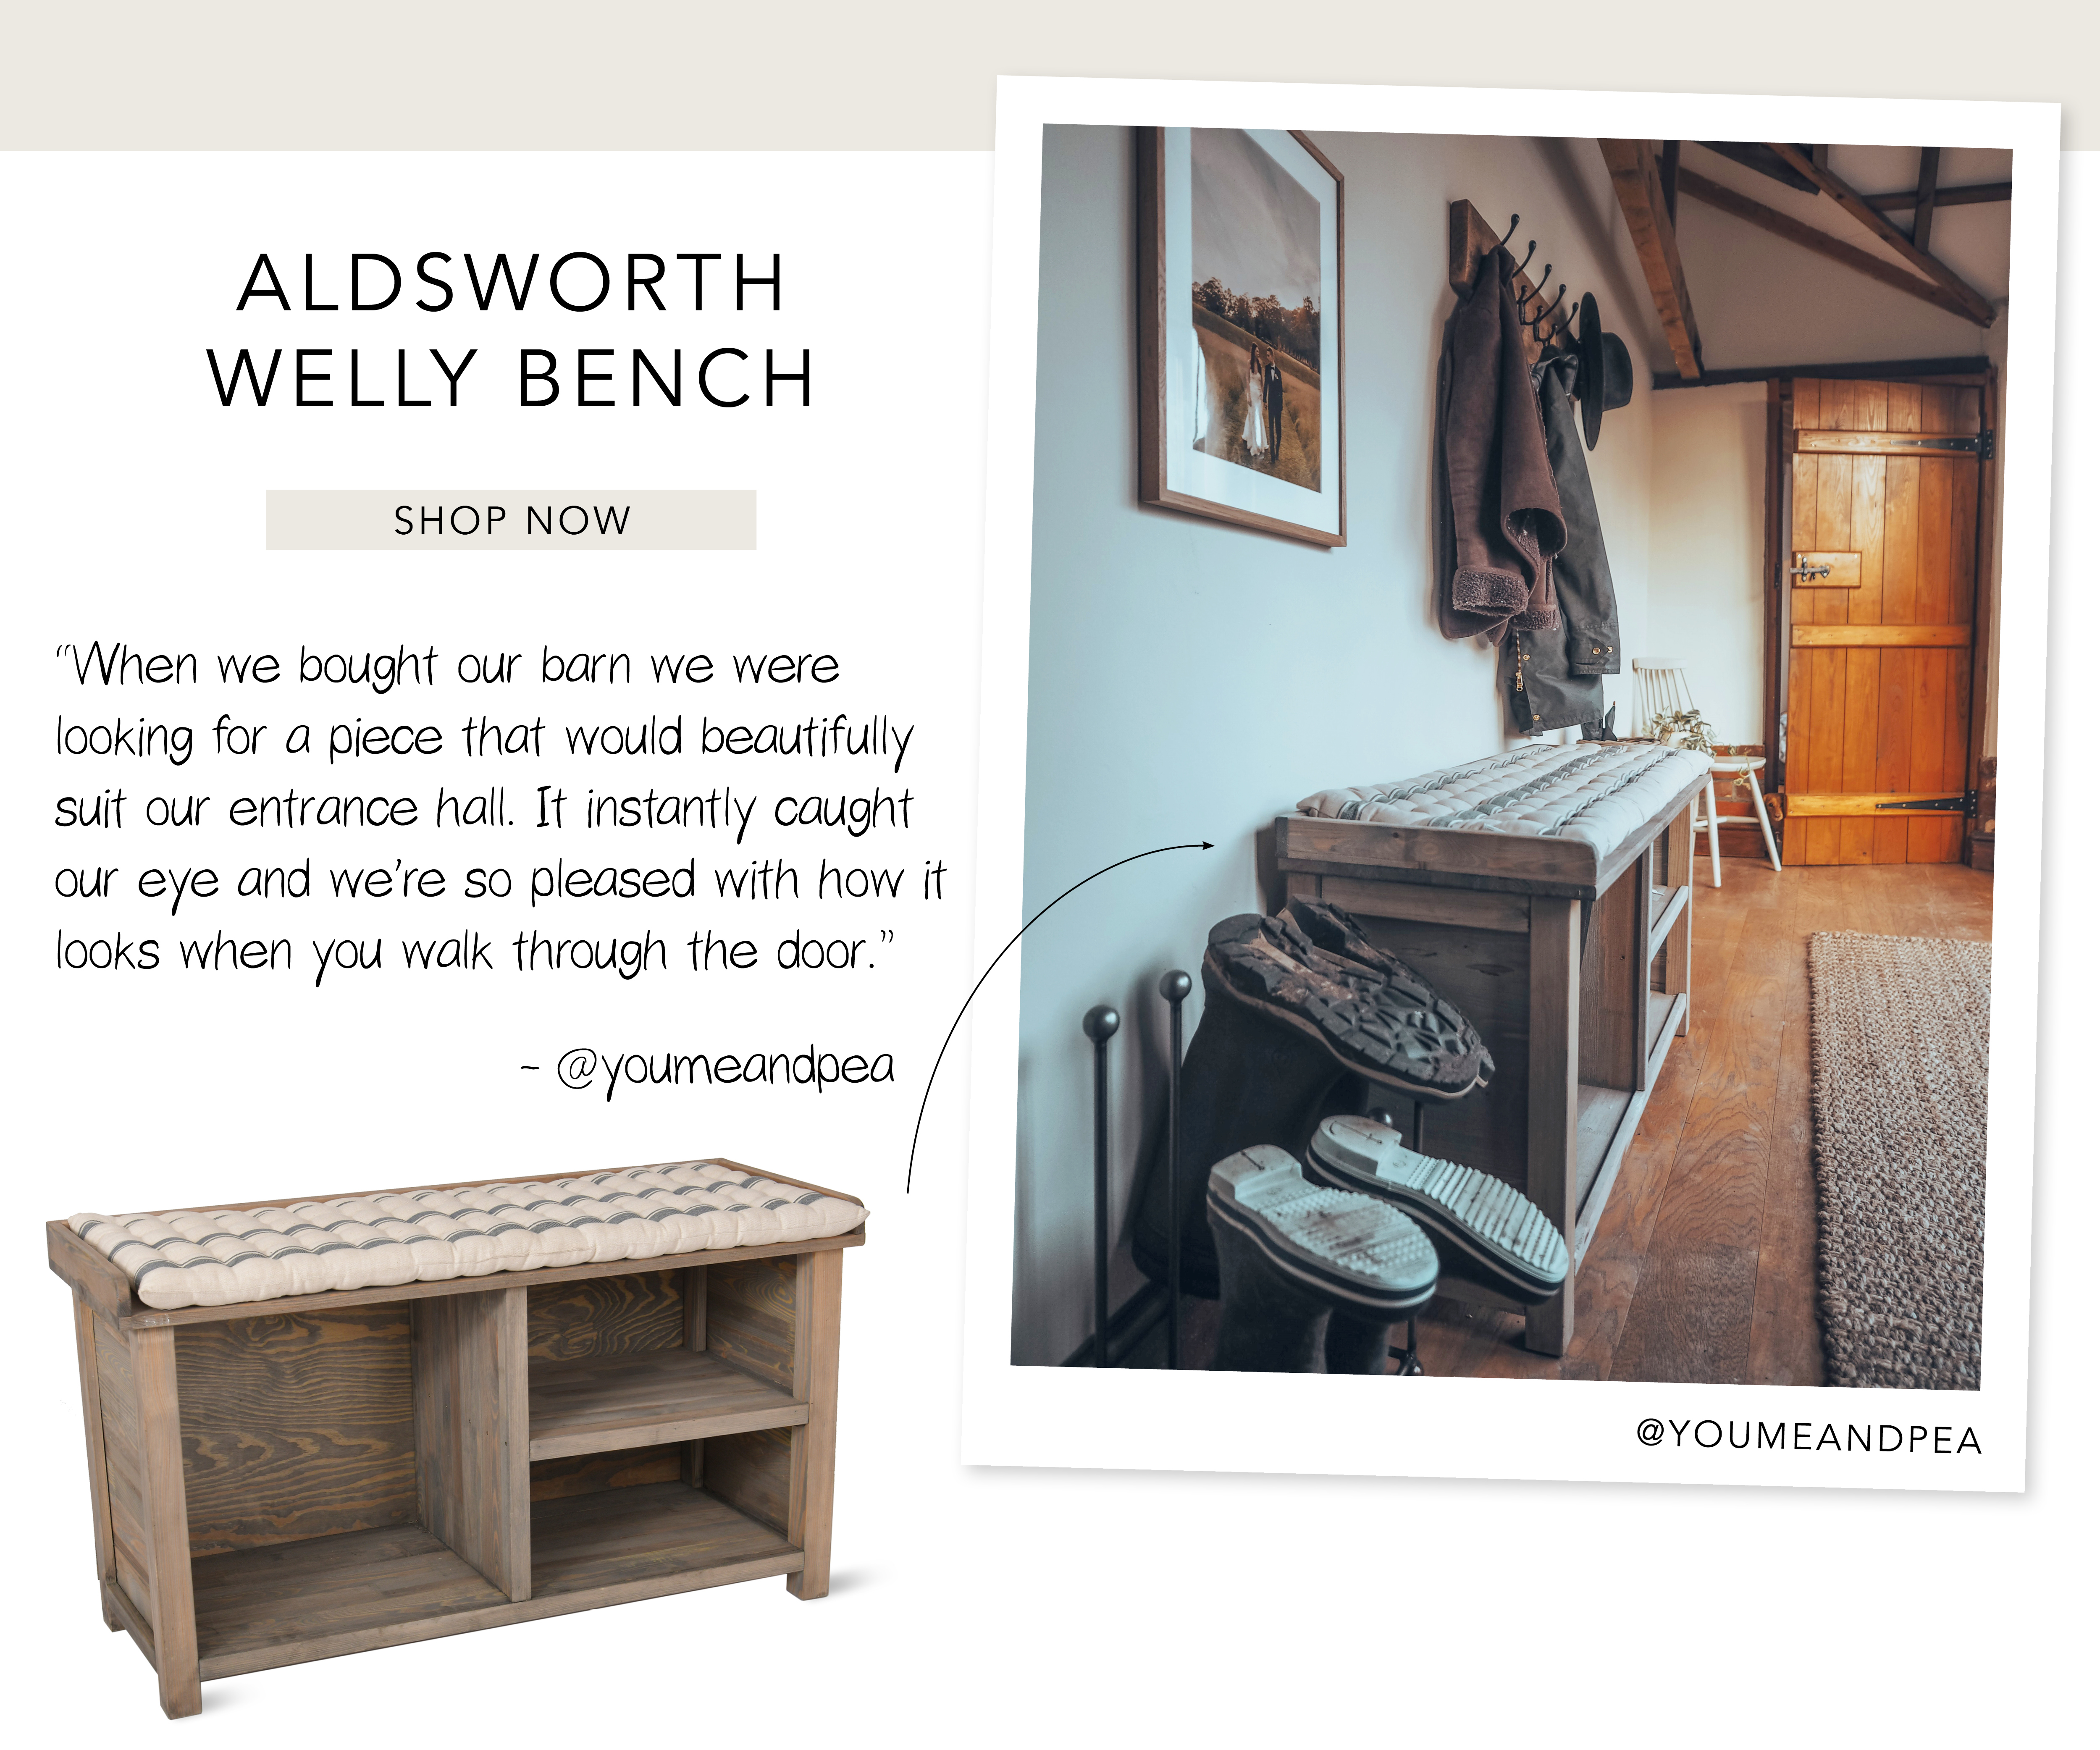 Aldsworth Welly Bench